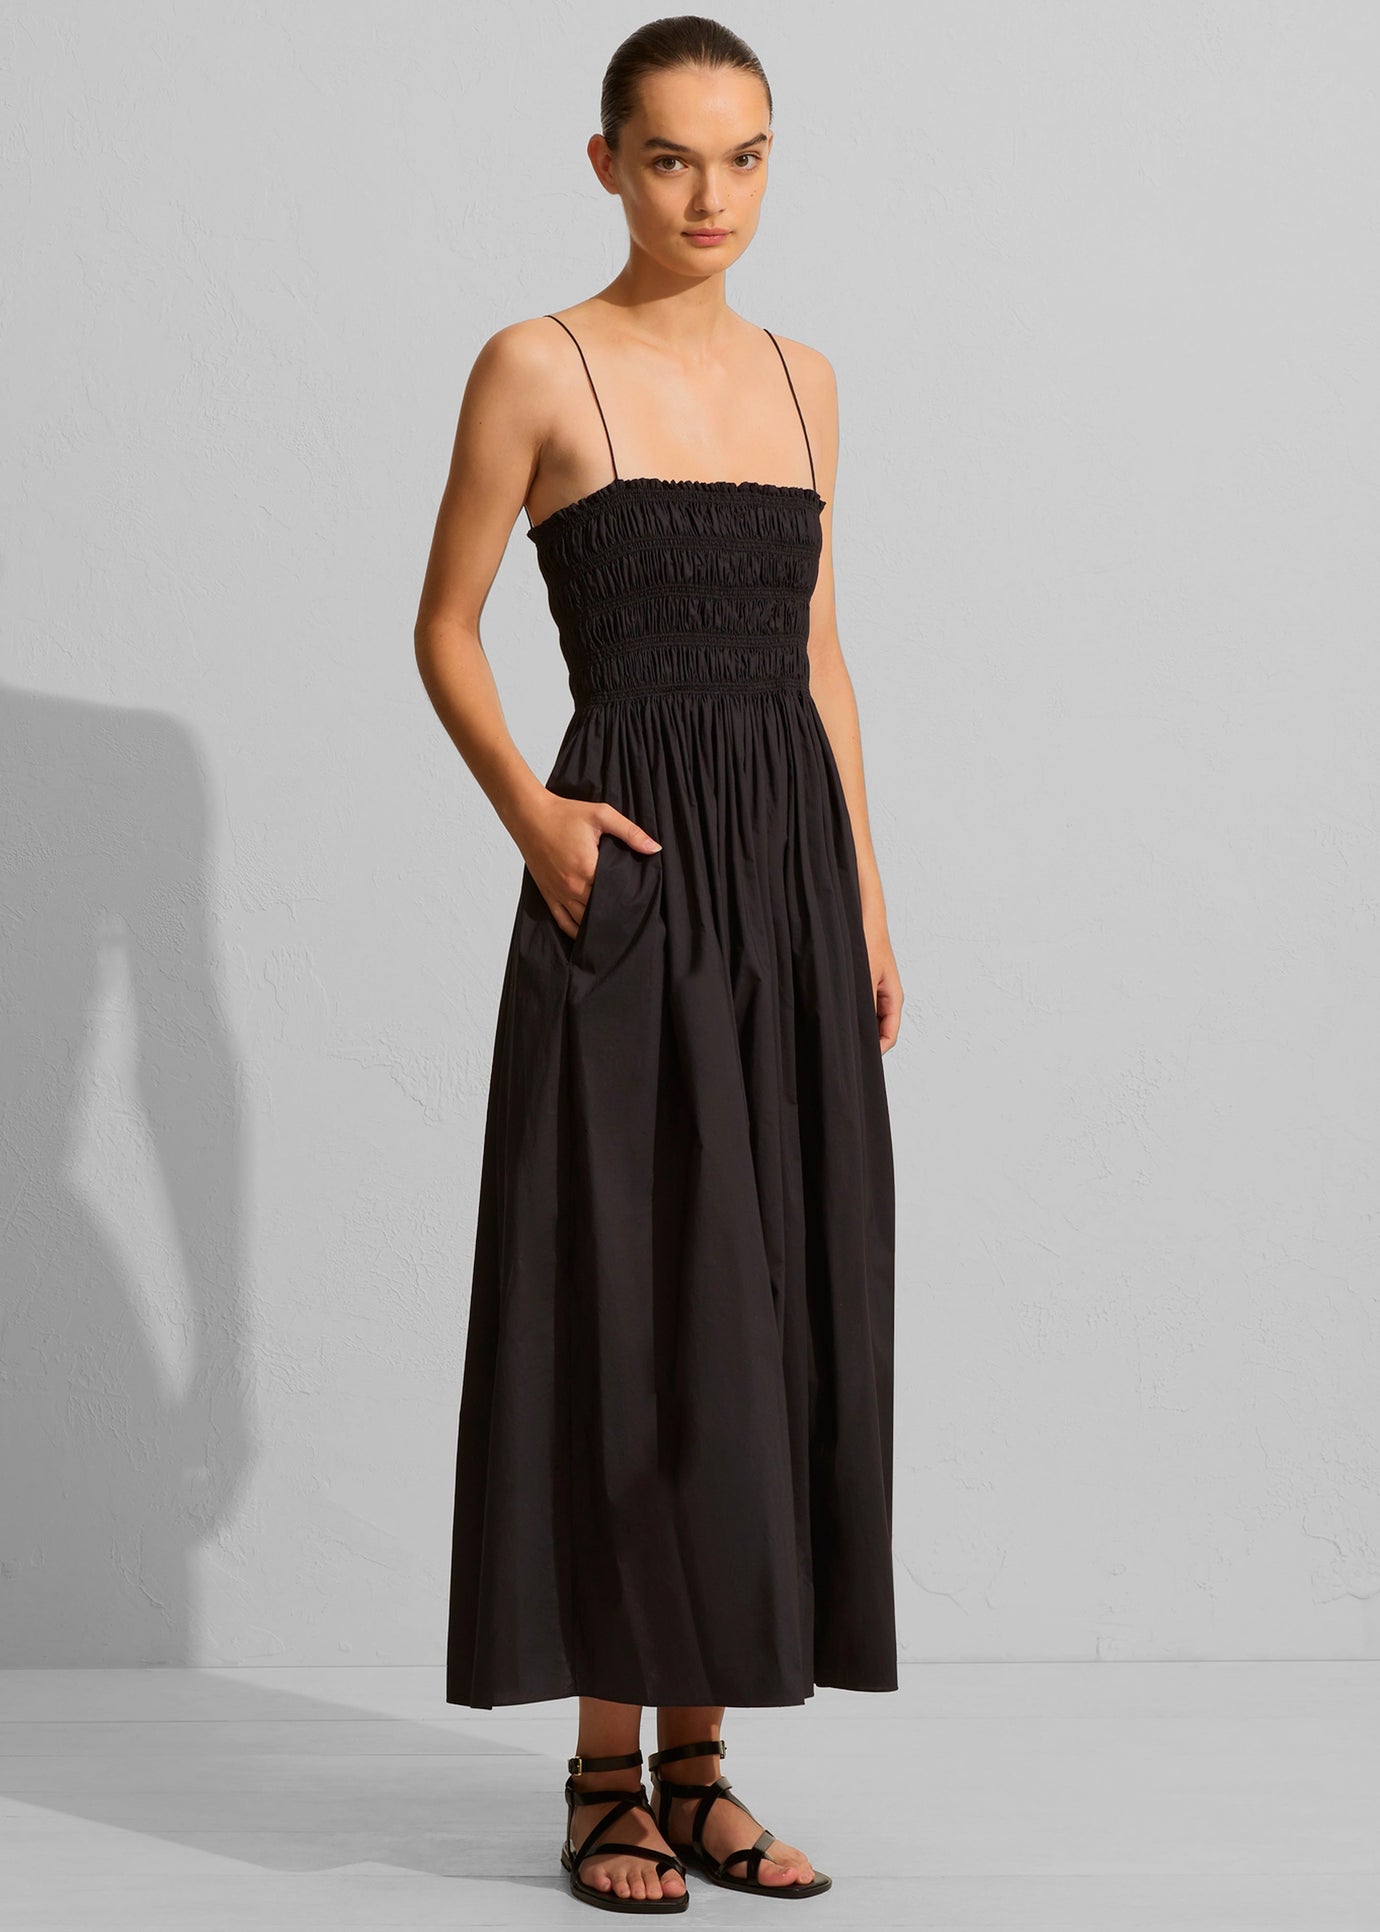 Matteau Shirred Bodice Dress - Black - 1